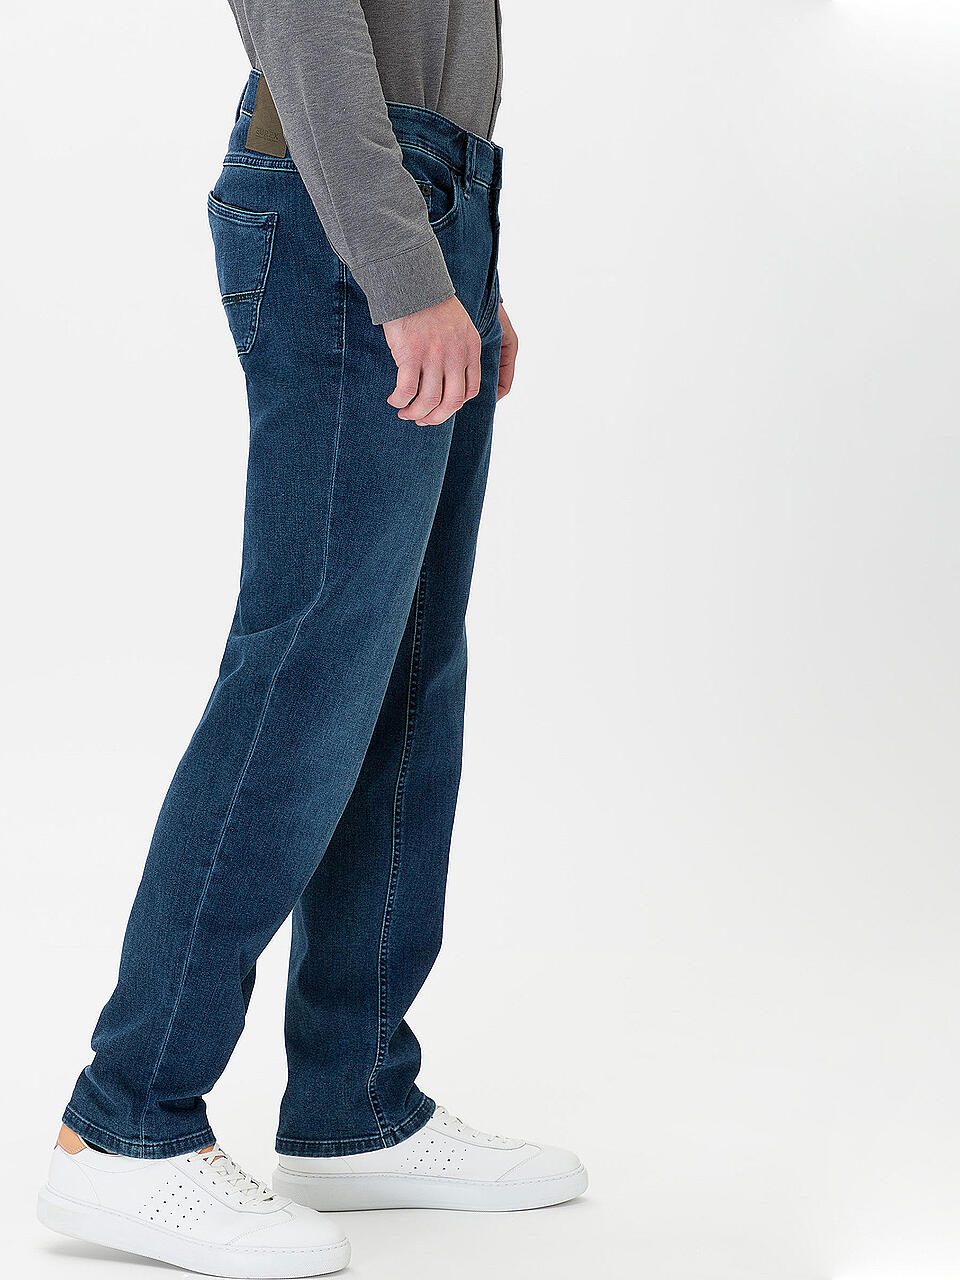 EUREX | Jeans Straight Fit LUKE | blau